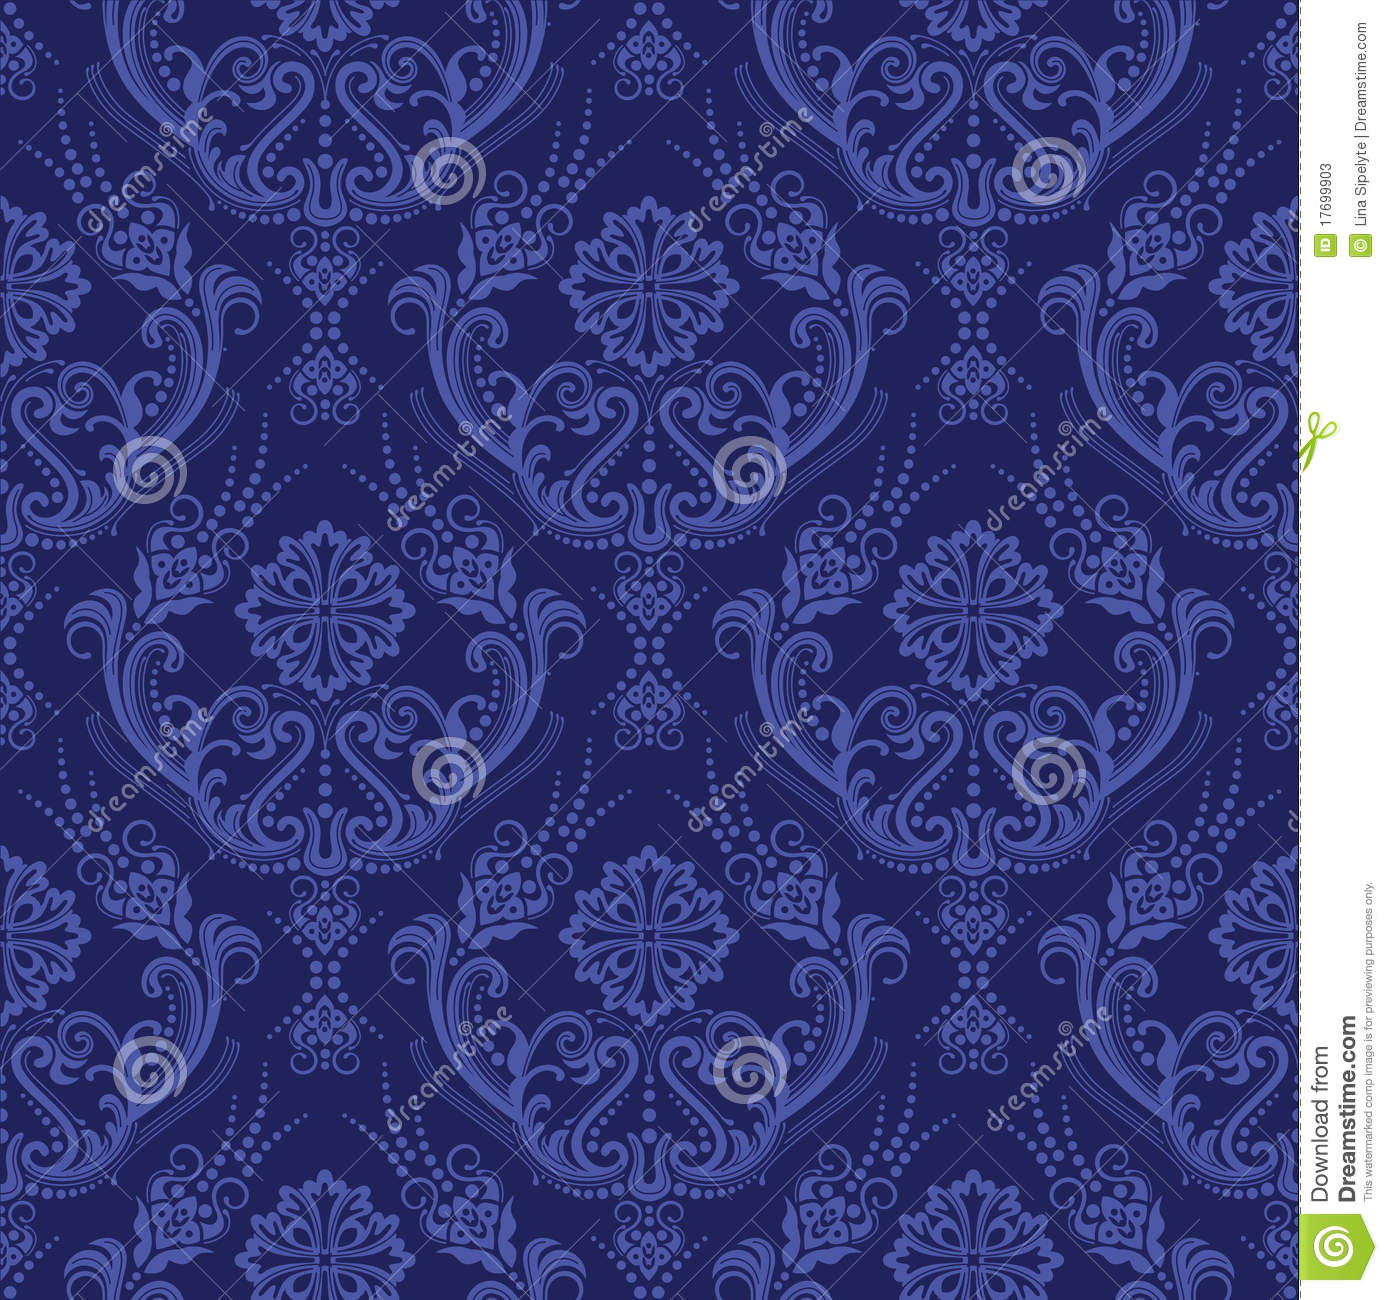 Royal Blue Damask Wallpaper Luxury Floral